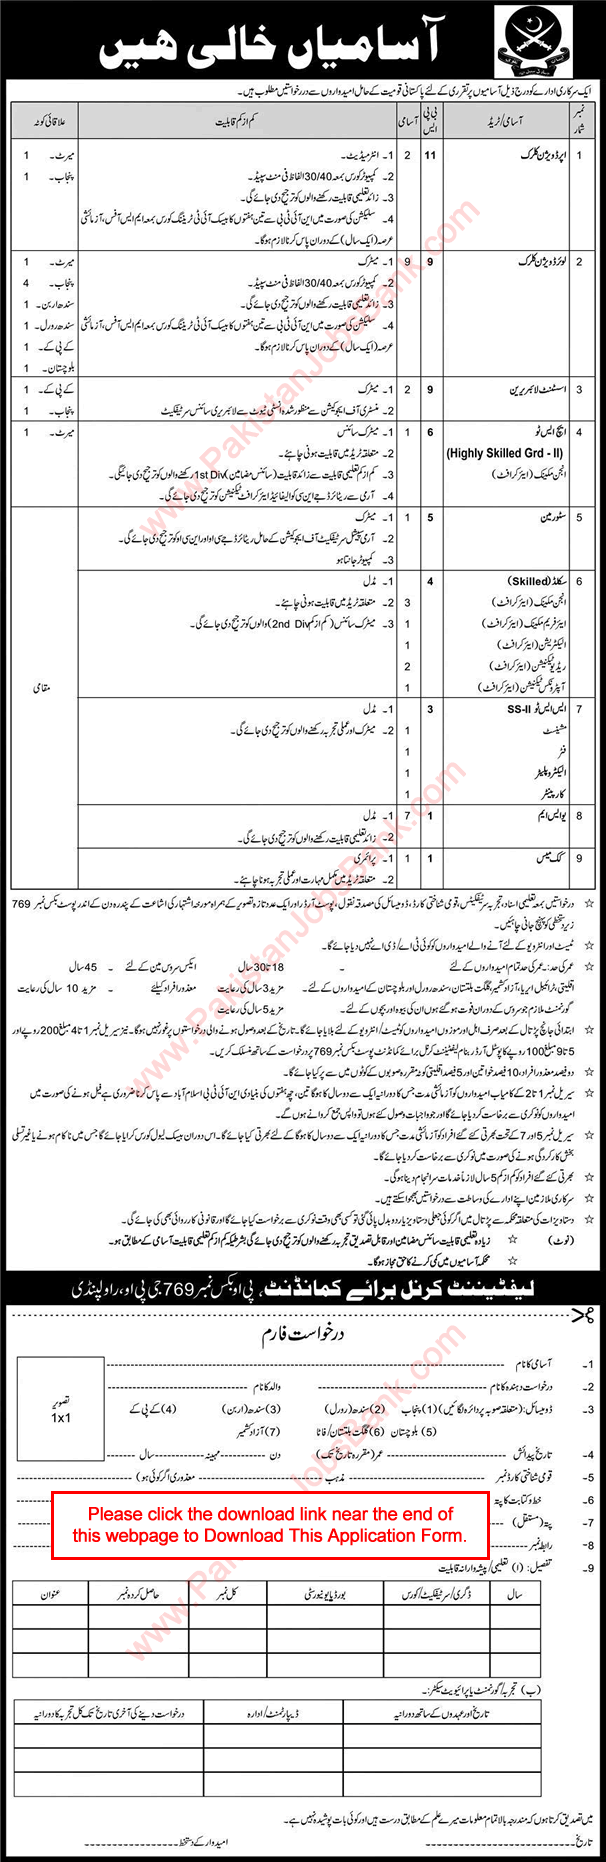 PO Box 769 GPO Rawalpindi Jobs 2020 July Application Form Pakistan Army Latest